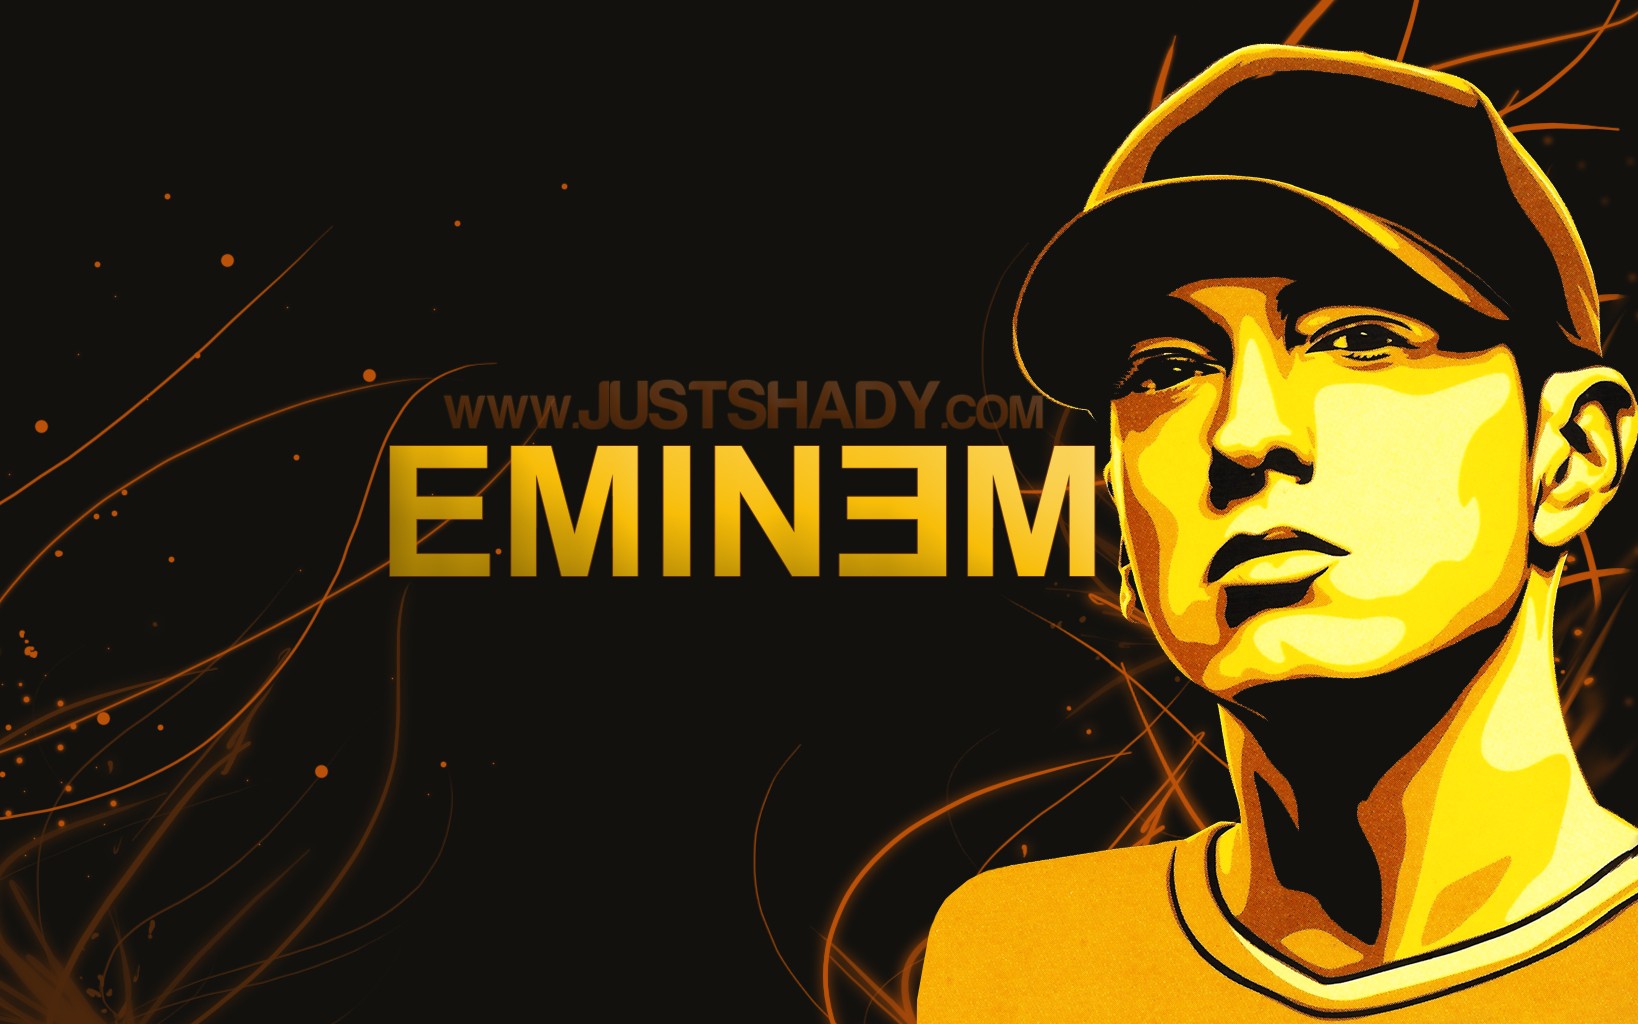 Eminem Wallpaper Hd - Eminem Hd Wallpaper For Iphone - 1638x1024 Wallpaper  